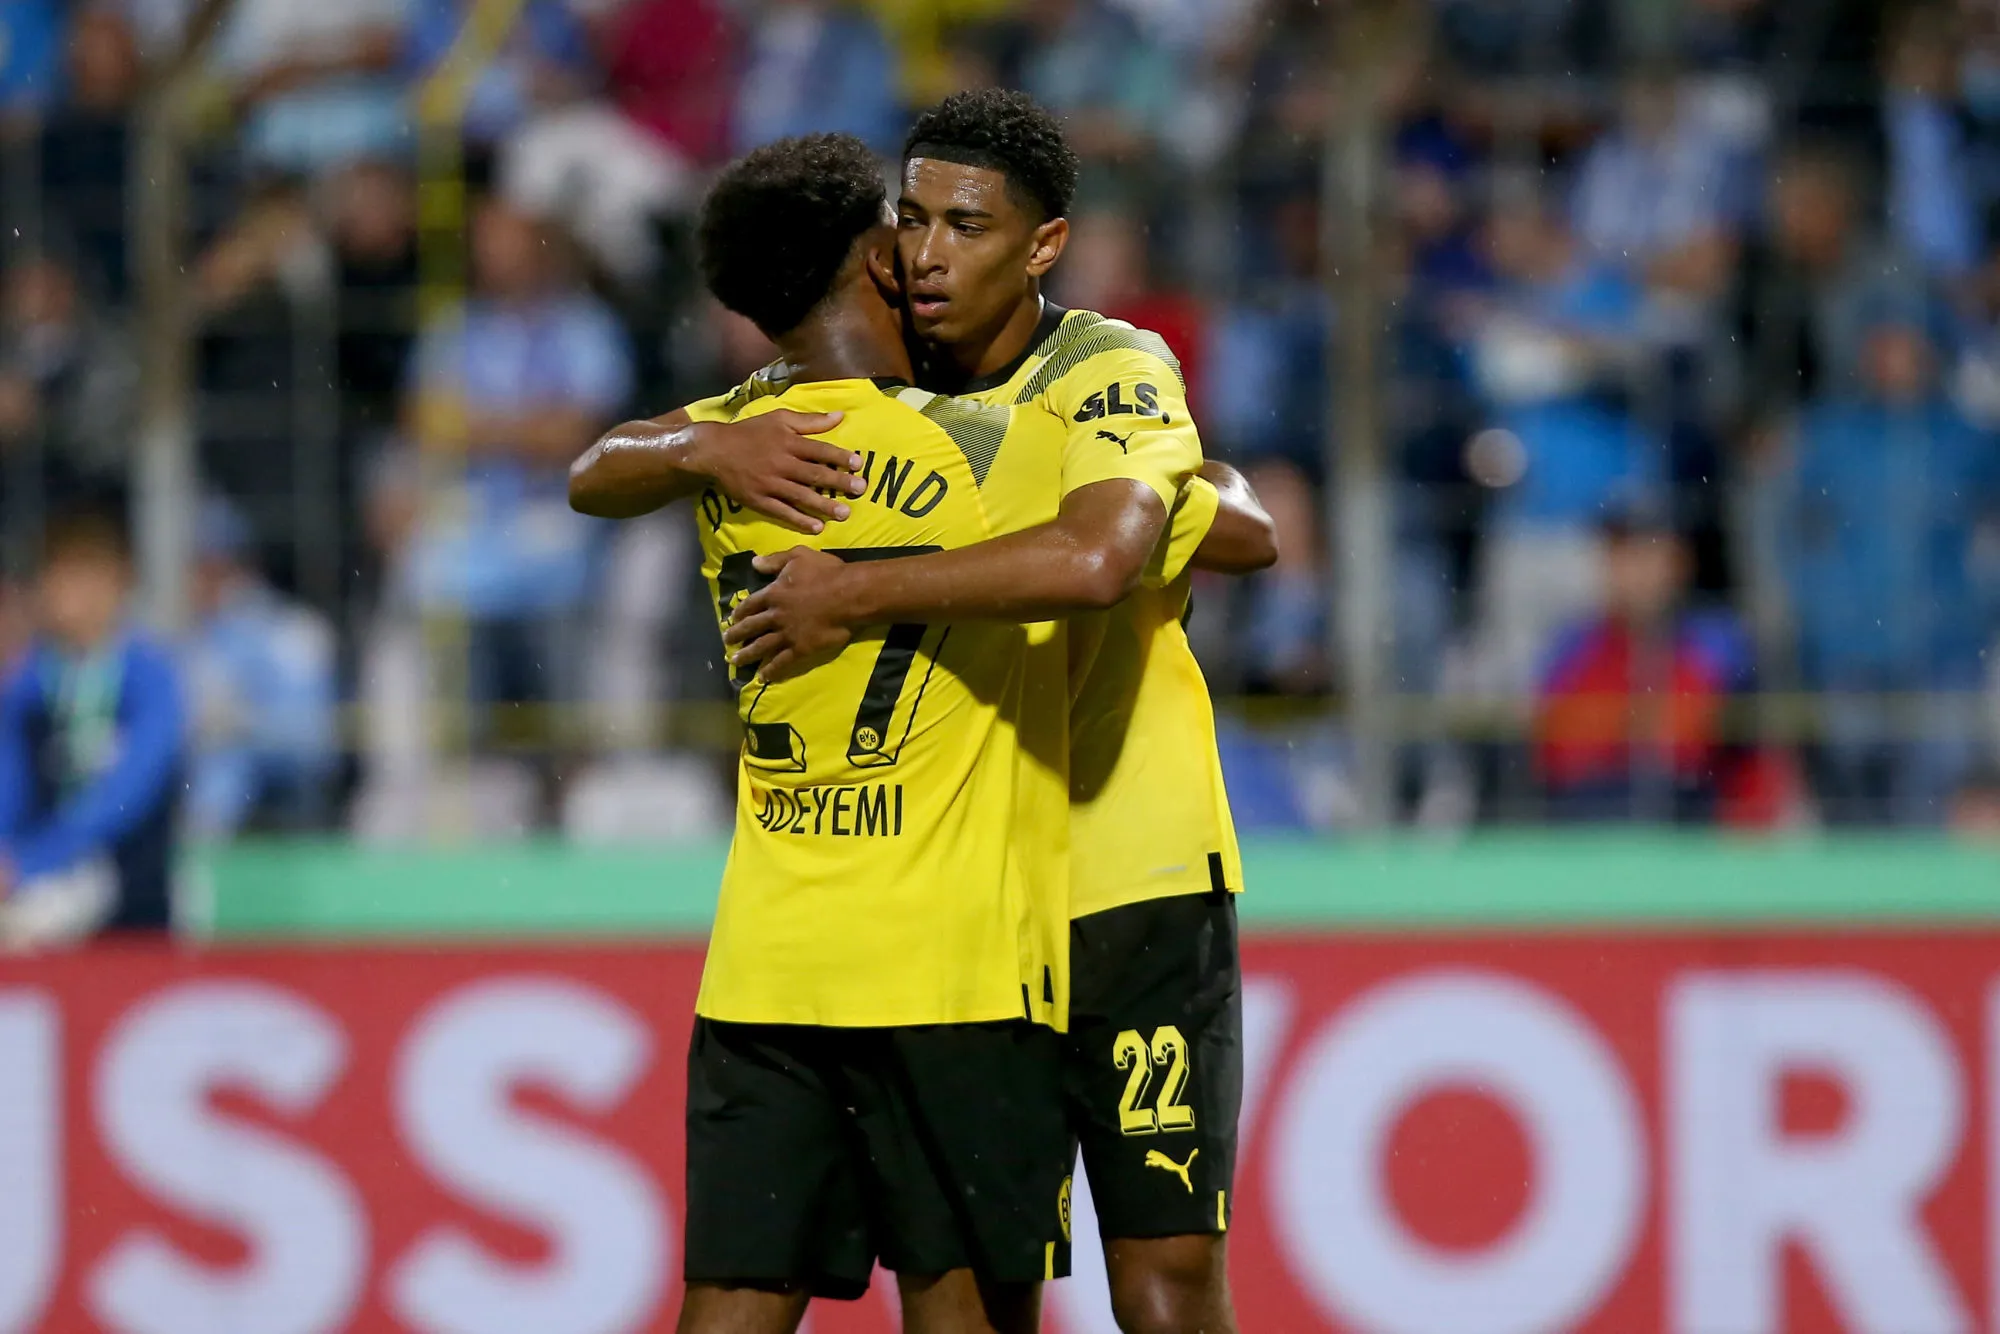 Pronostic Dortmund Schalke 04 : Analyse, cotes et prono du match de Bundesliga